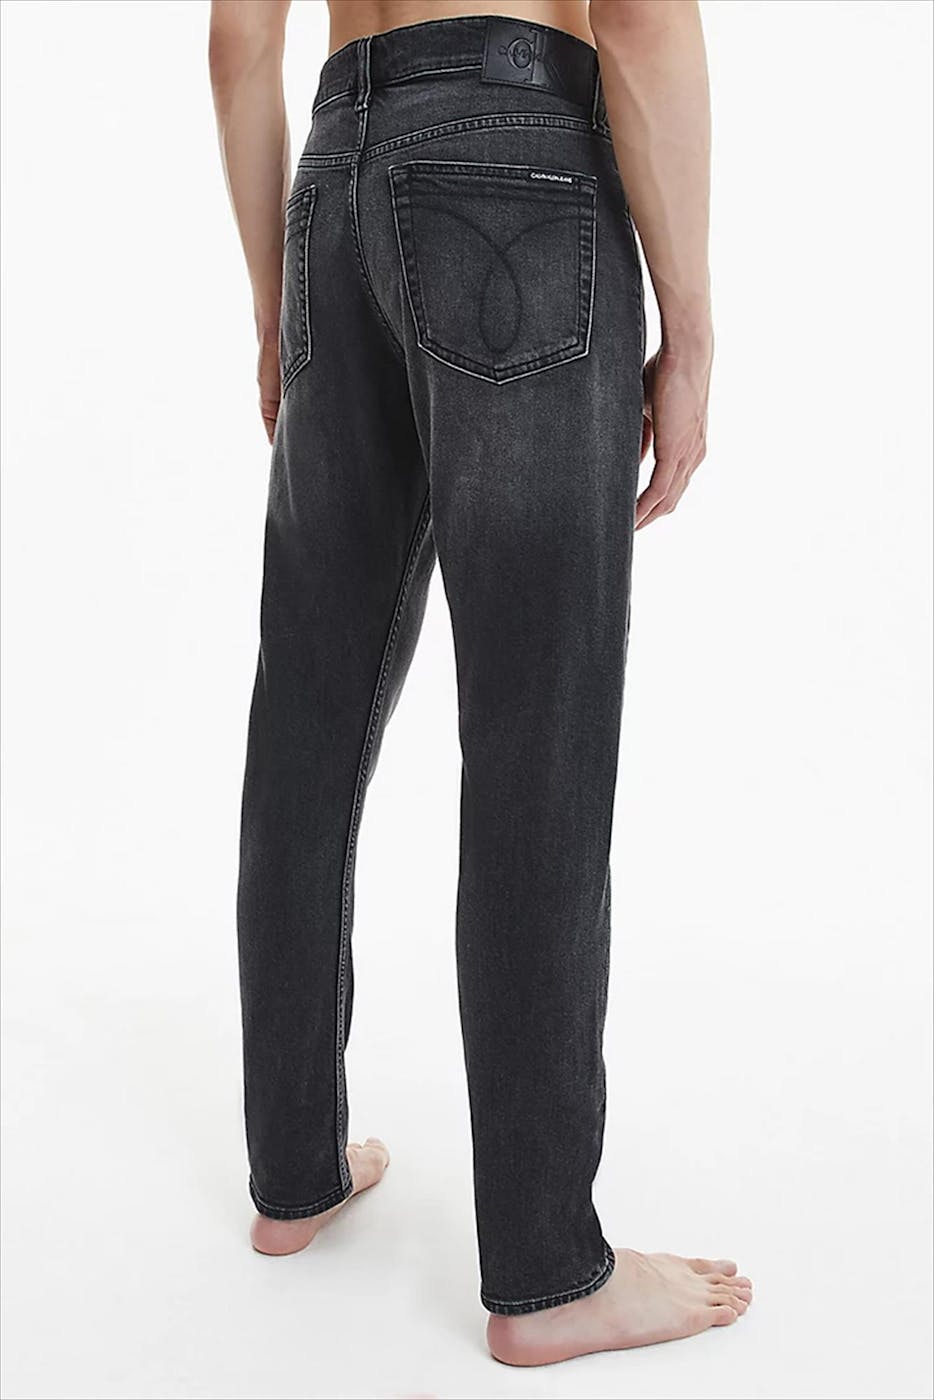 Calvin Klein Jeans - Donkergrijze Slim Tapered jeans